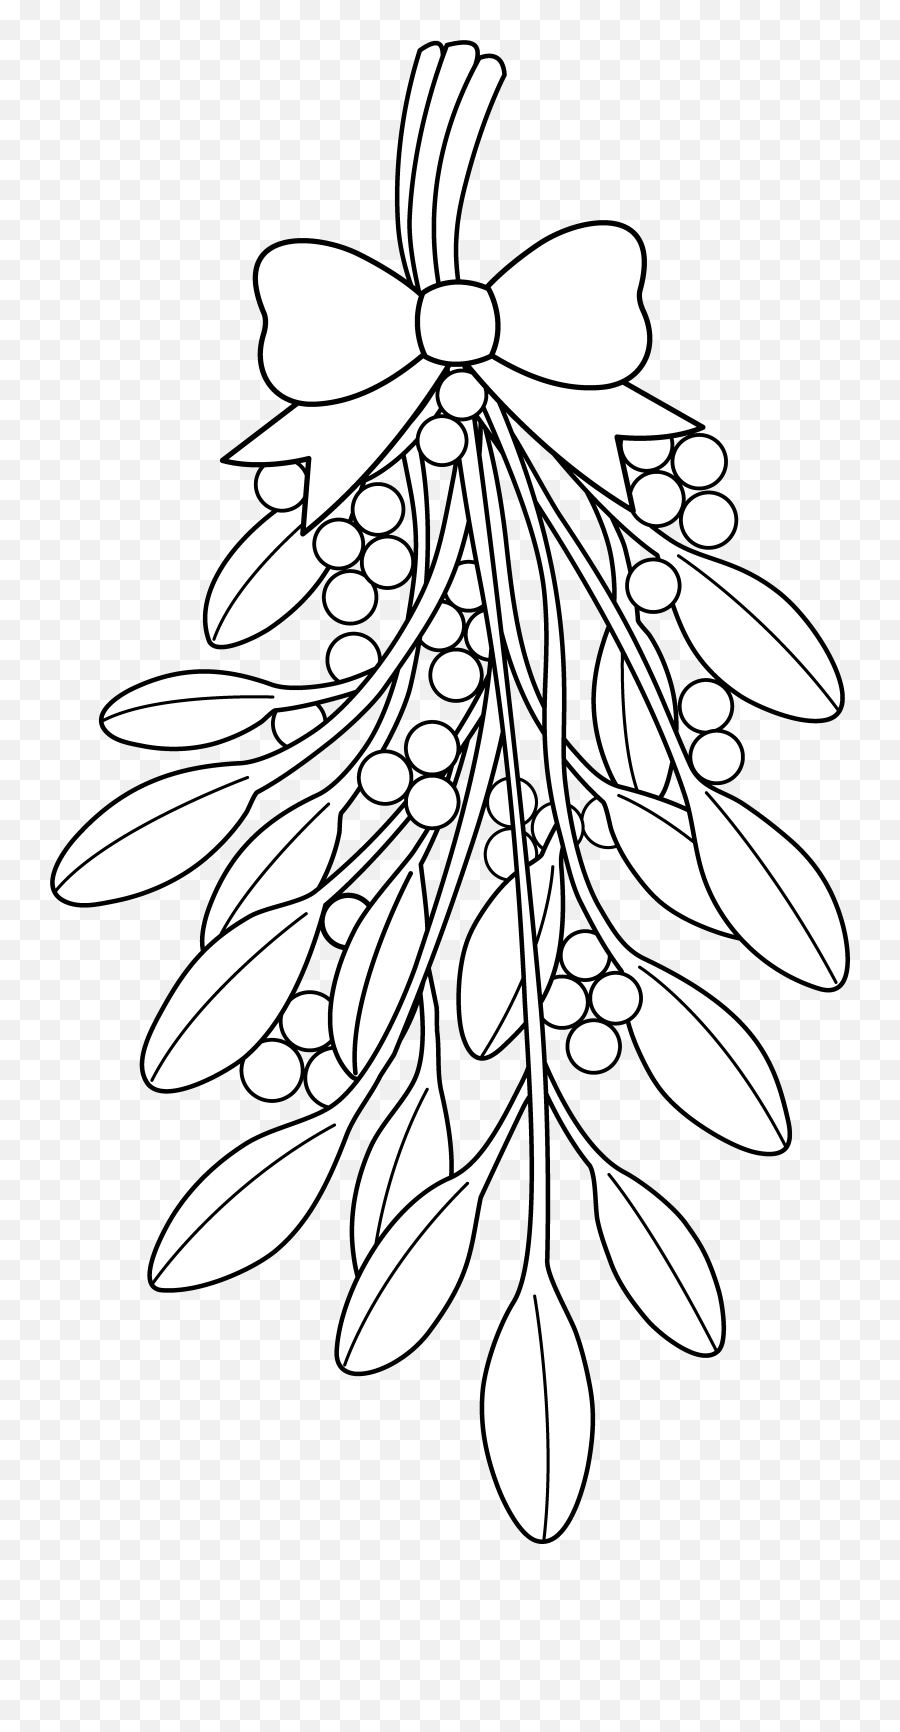 Mistletoe Drawing Transparent Png Image - Mistletoe Coloring Pages,Mistle Toe Png